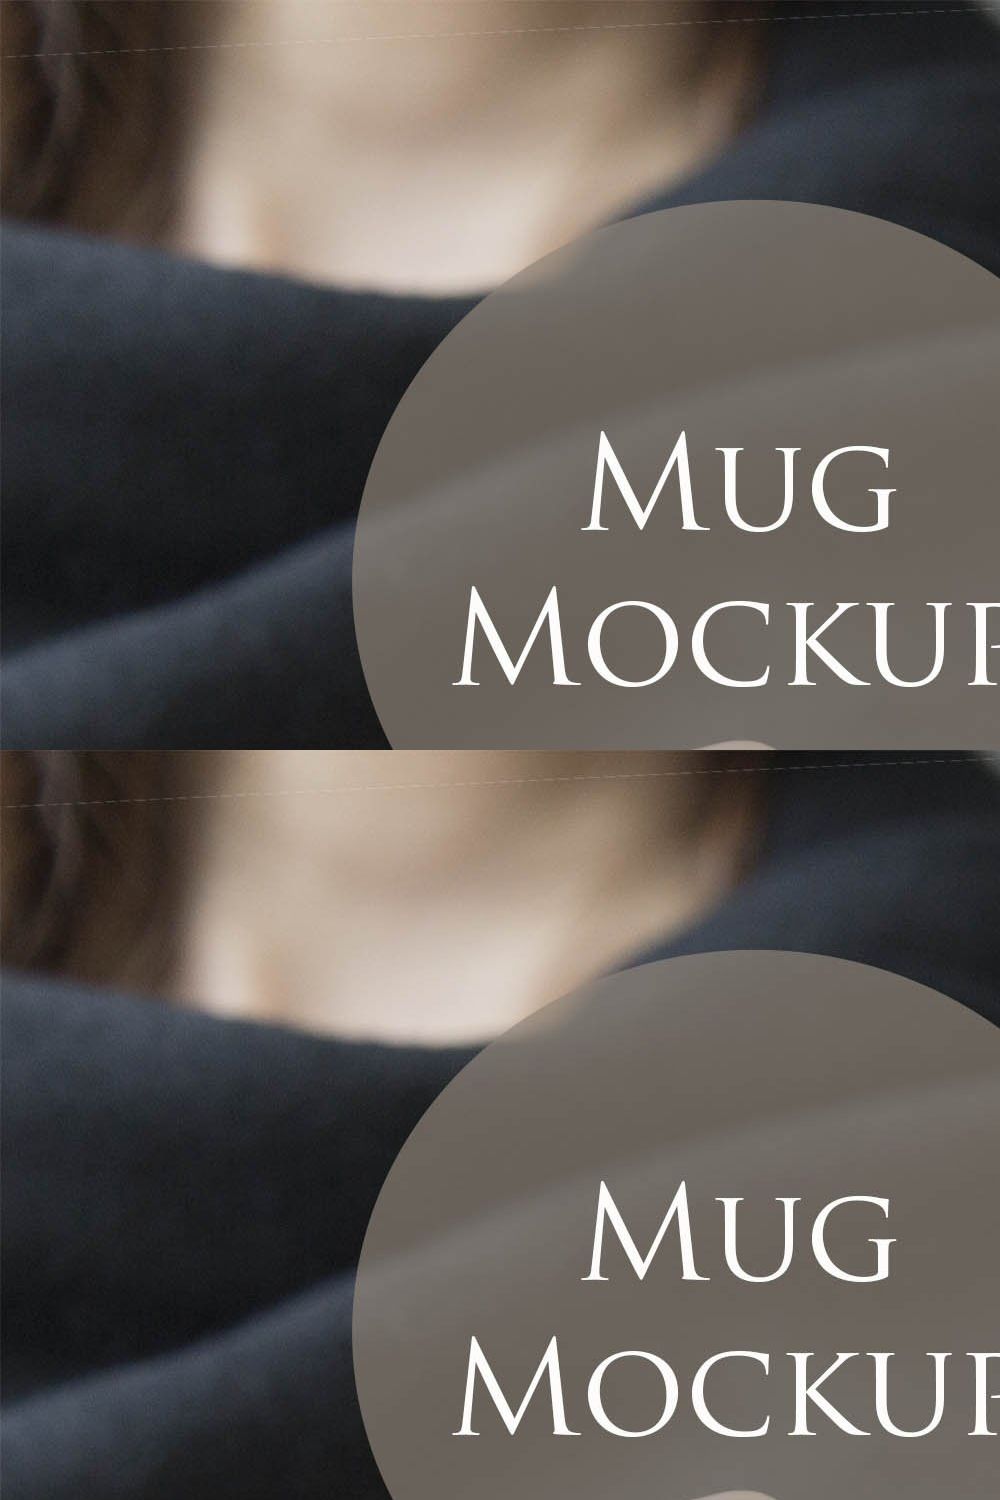 Double Mug Mockup pinterest preview image.